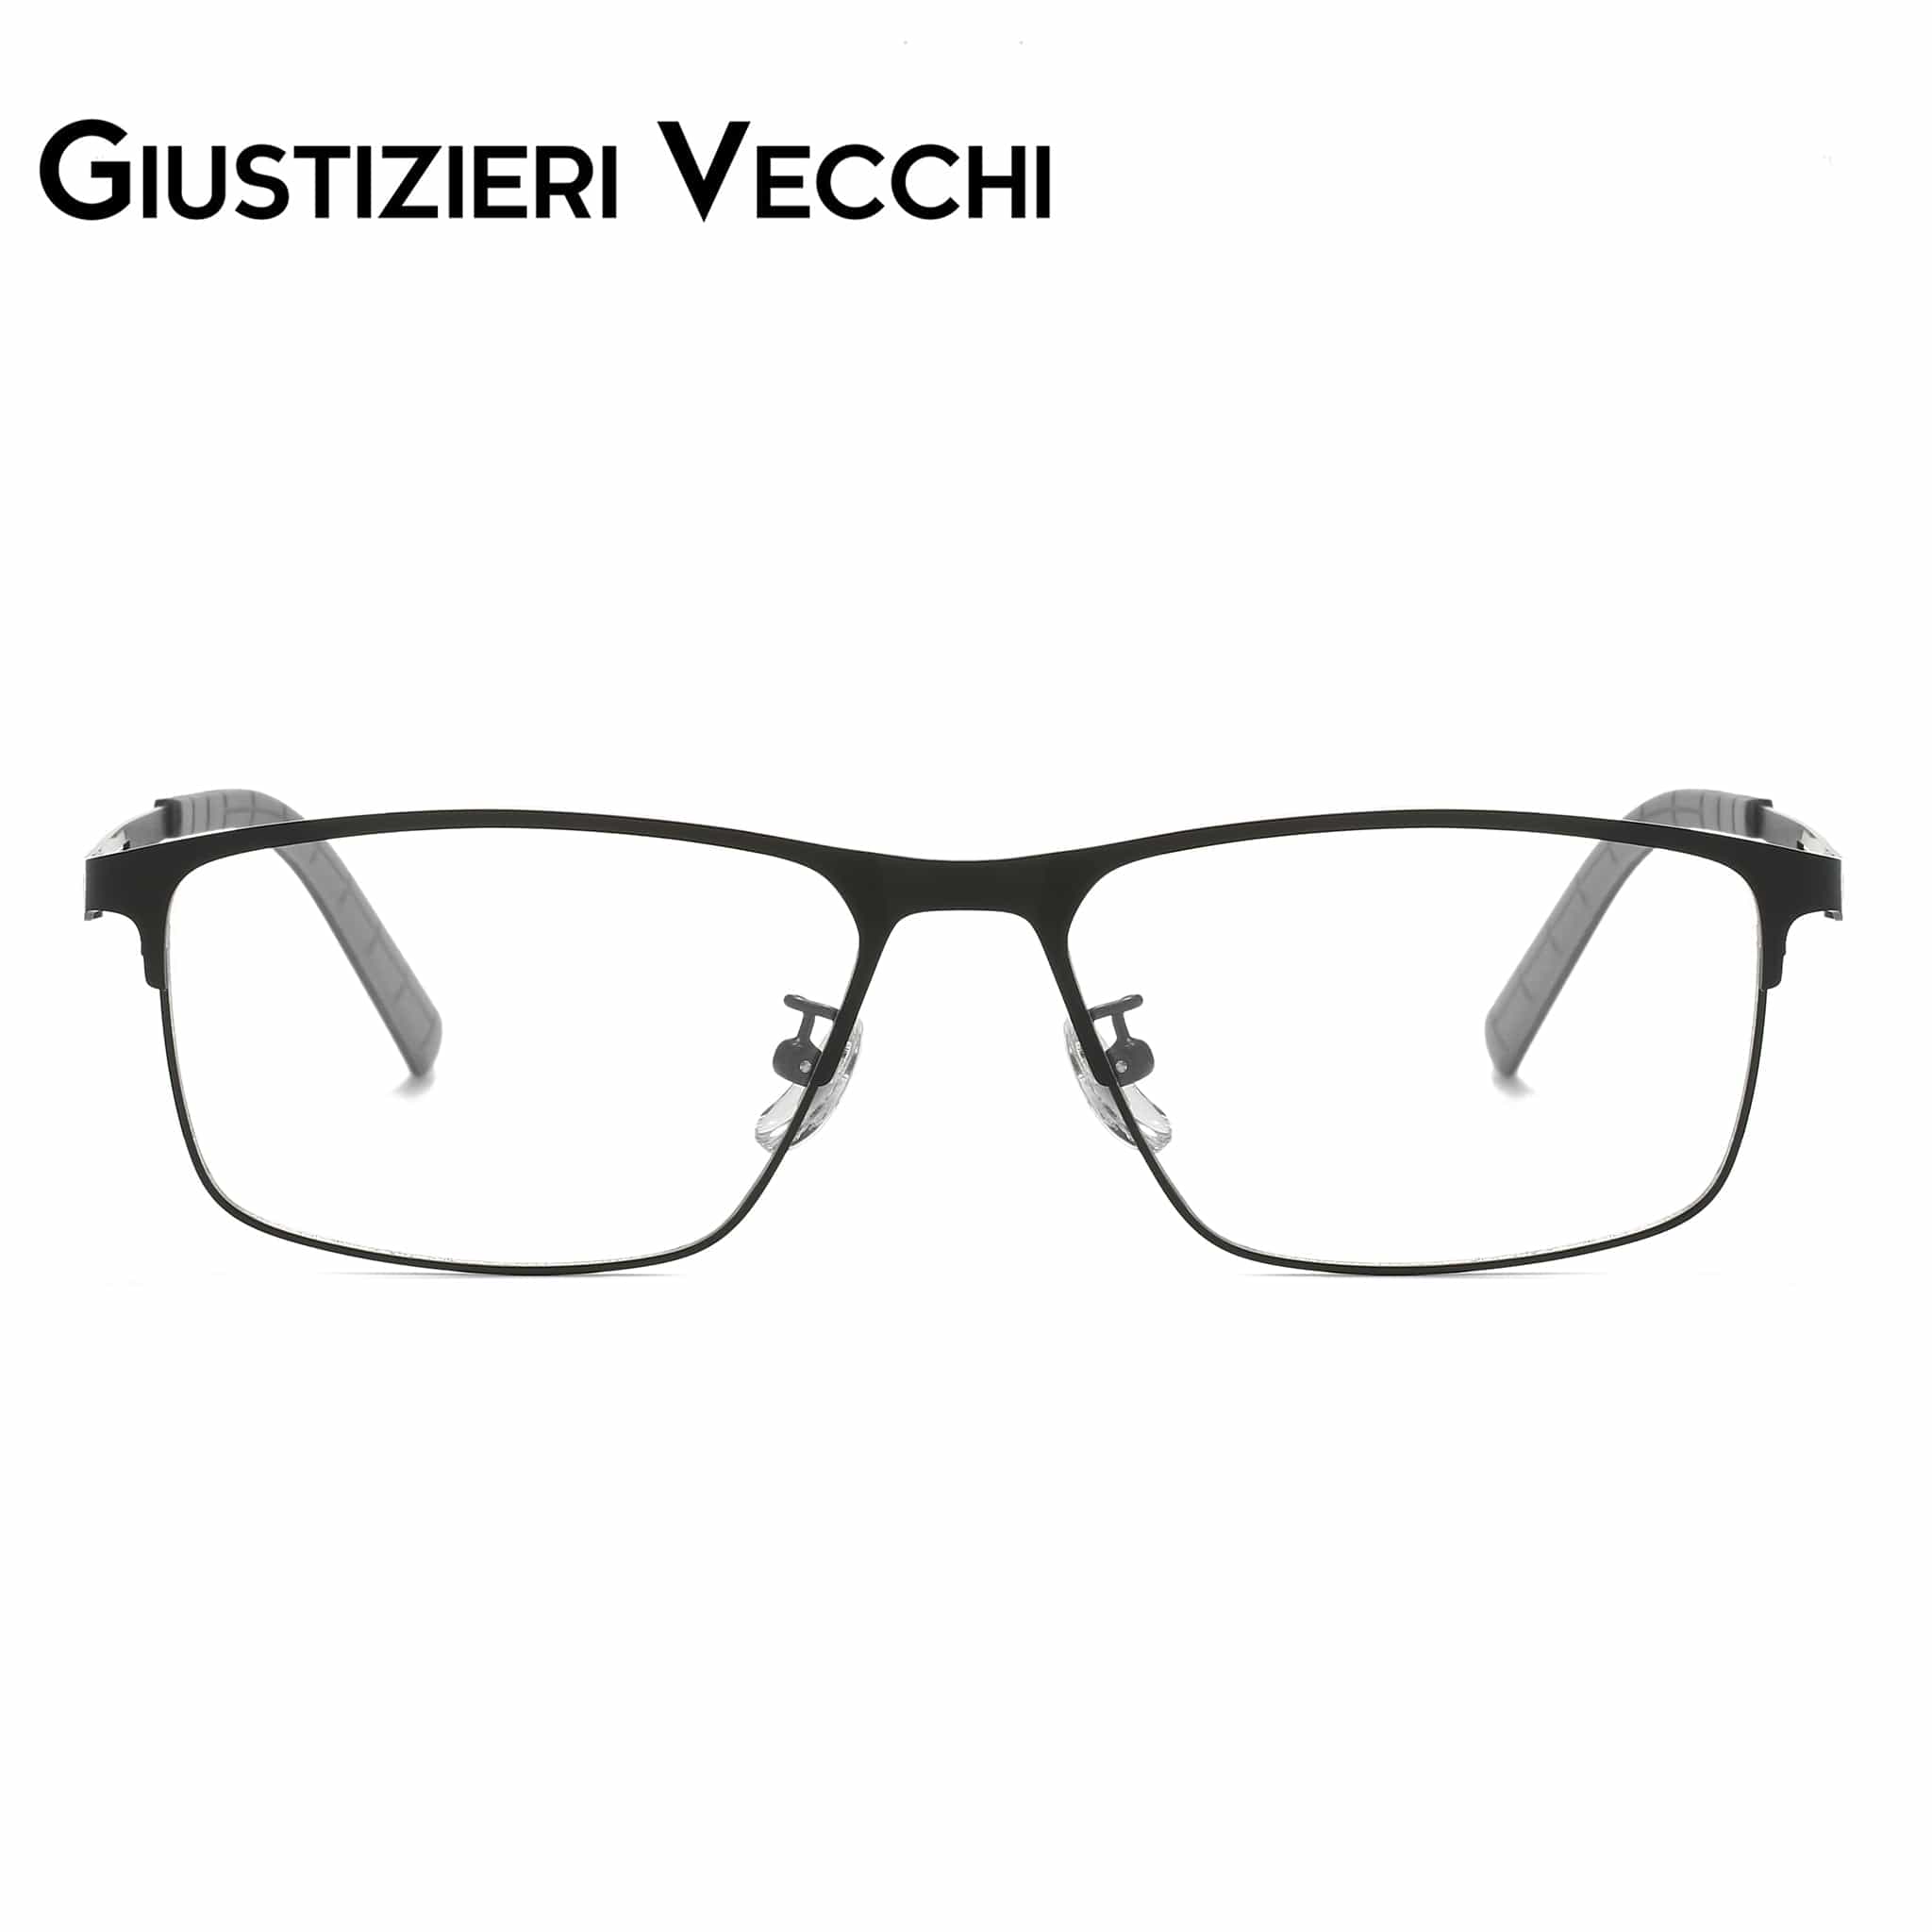 GIUSTIZIERI VECCHI Eyeglasses Black with Grey / Large Sunburst Uno